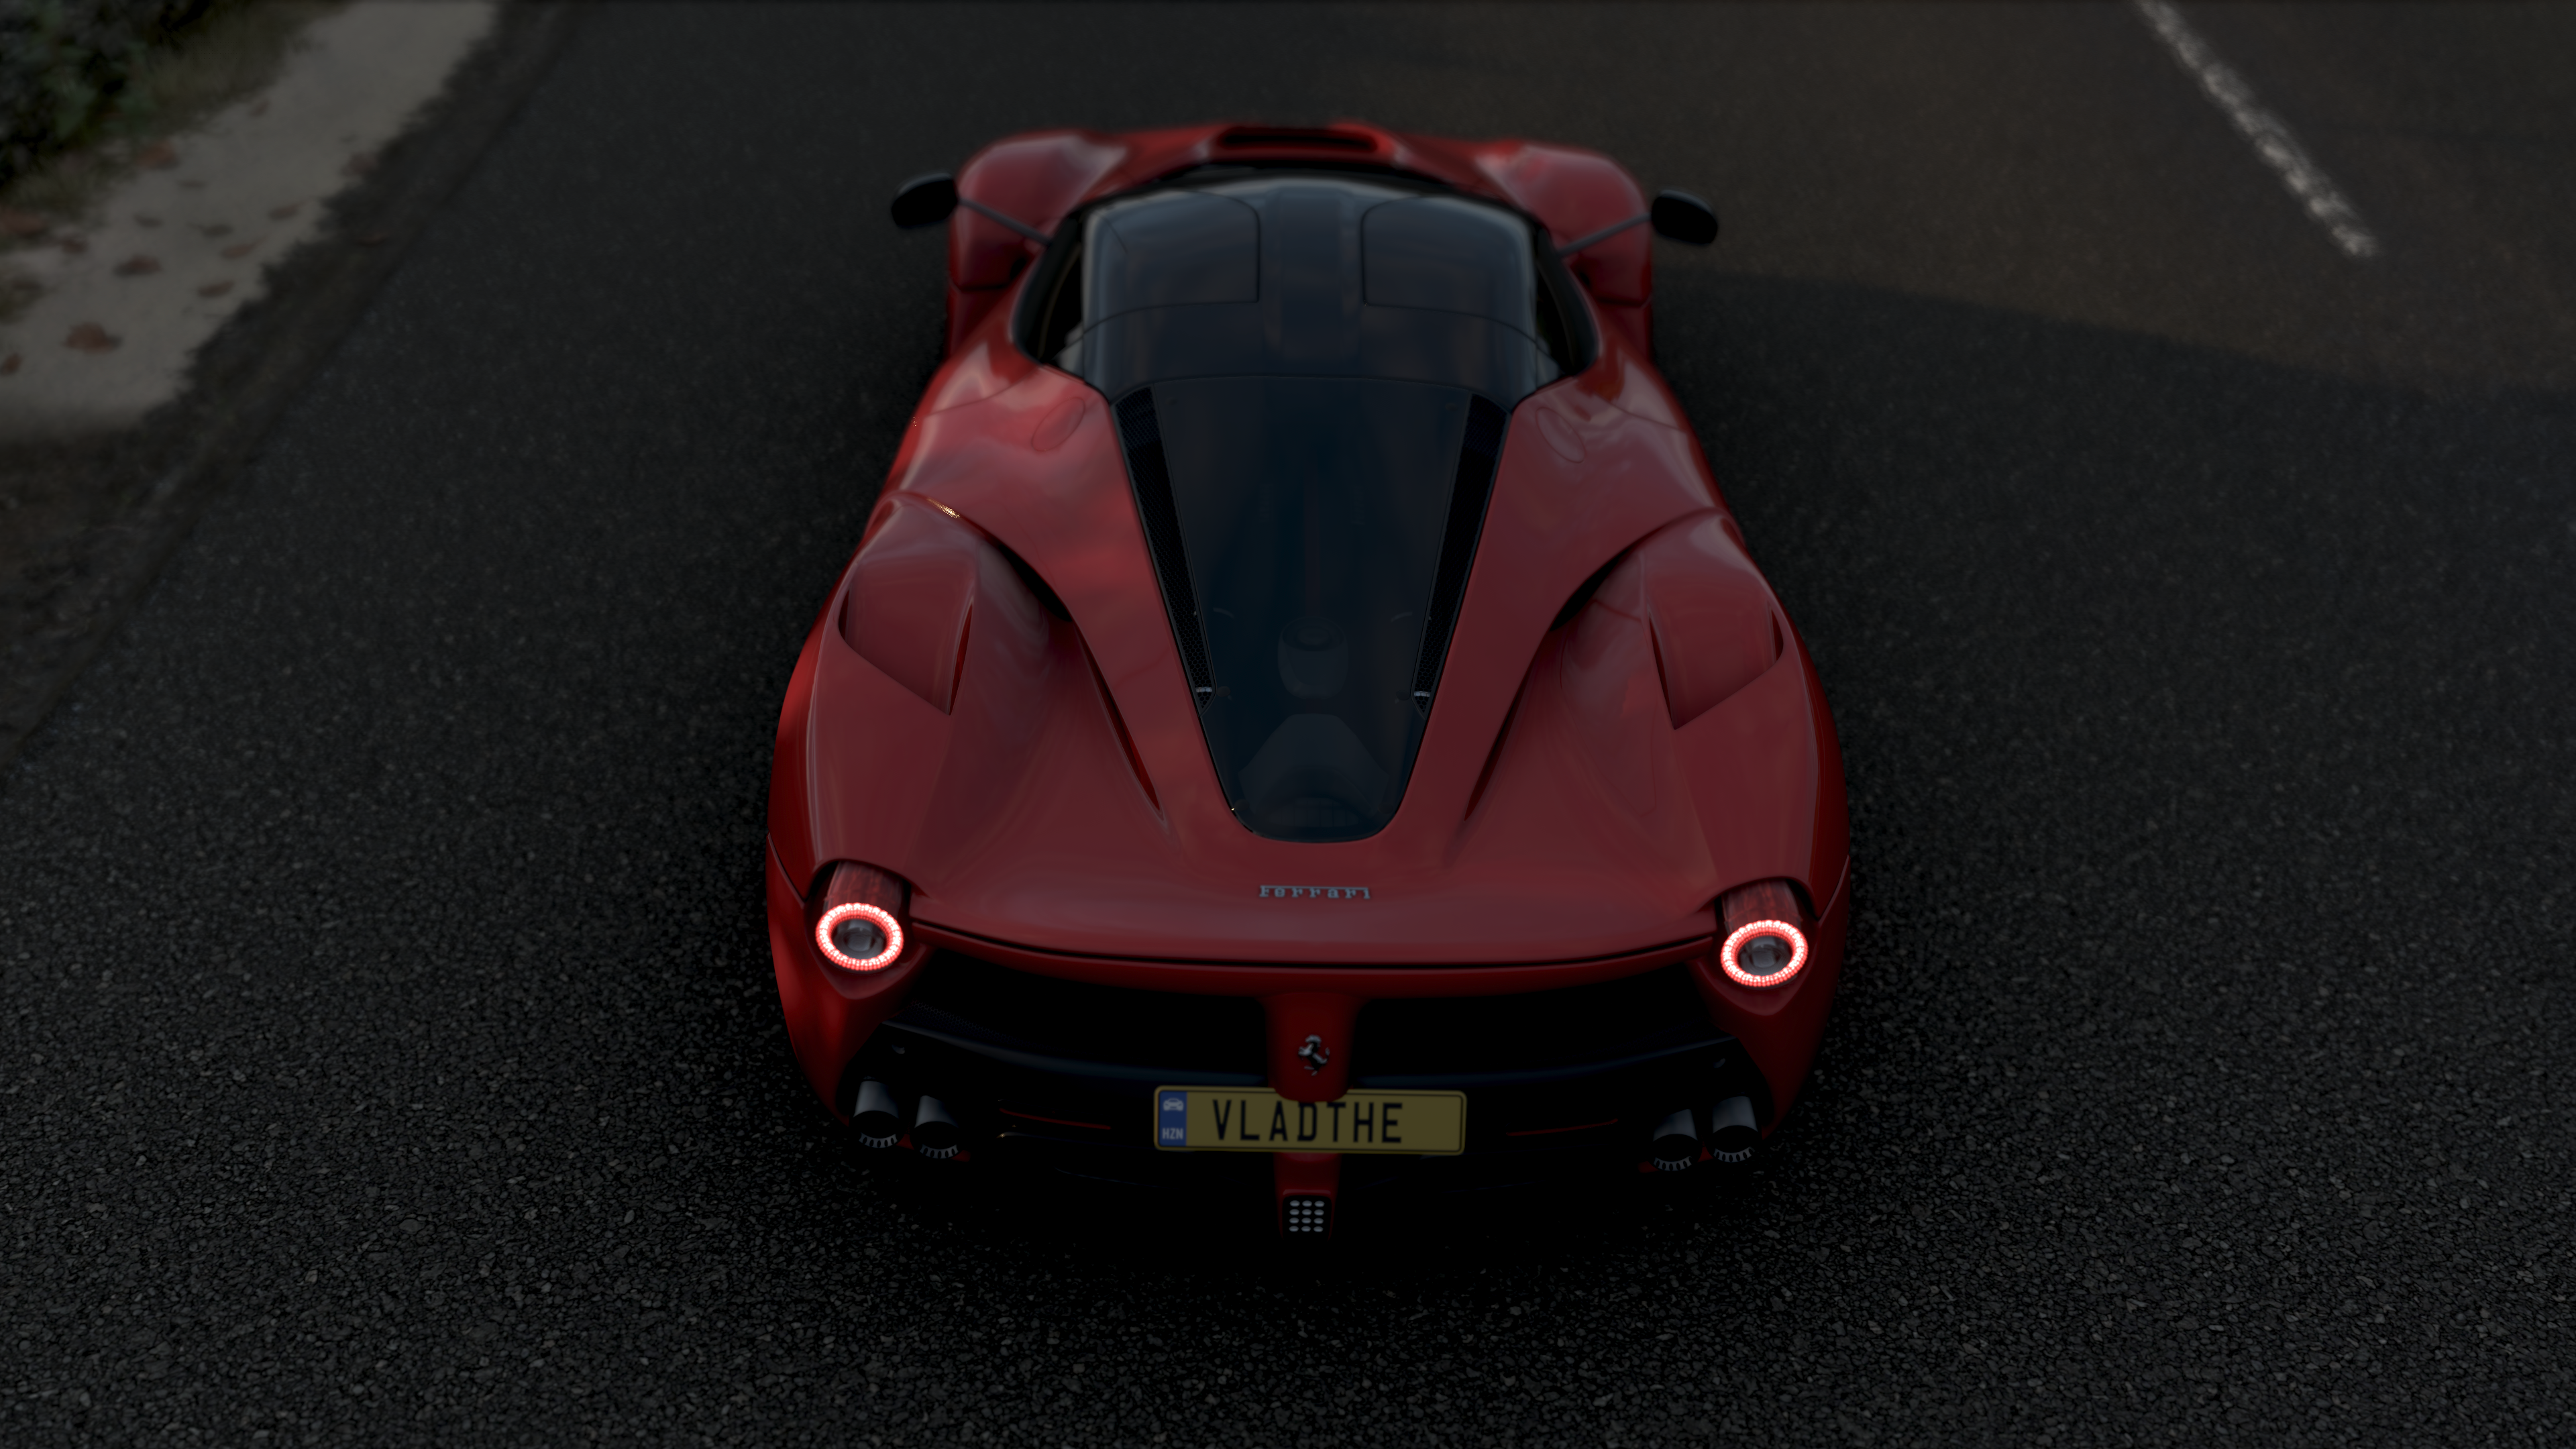 General 3840x2160 Forza Forza Horizon 4 video games screen shot Ferrari car